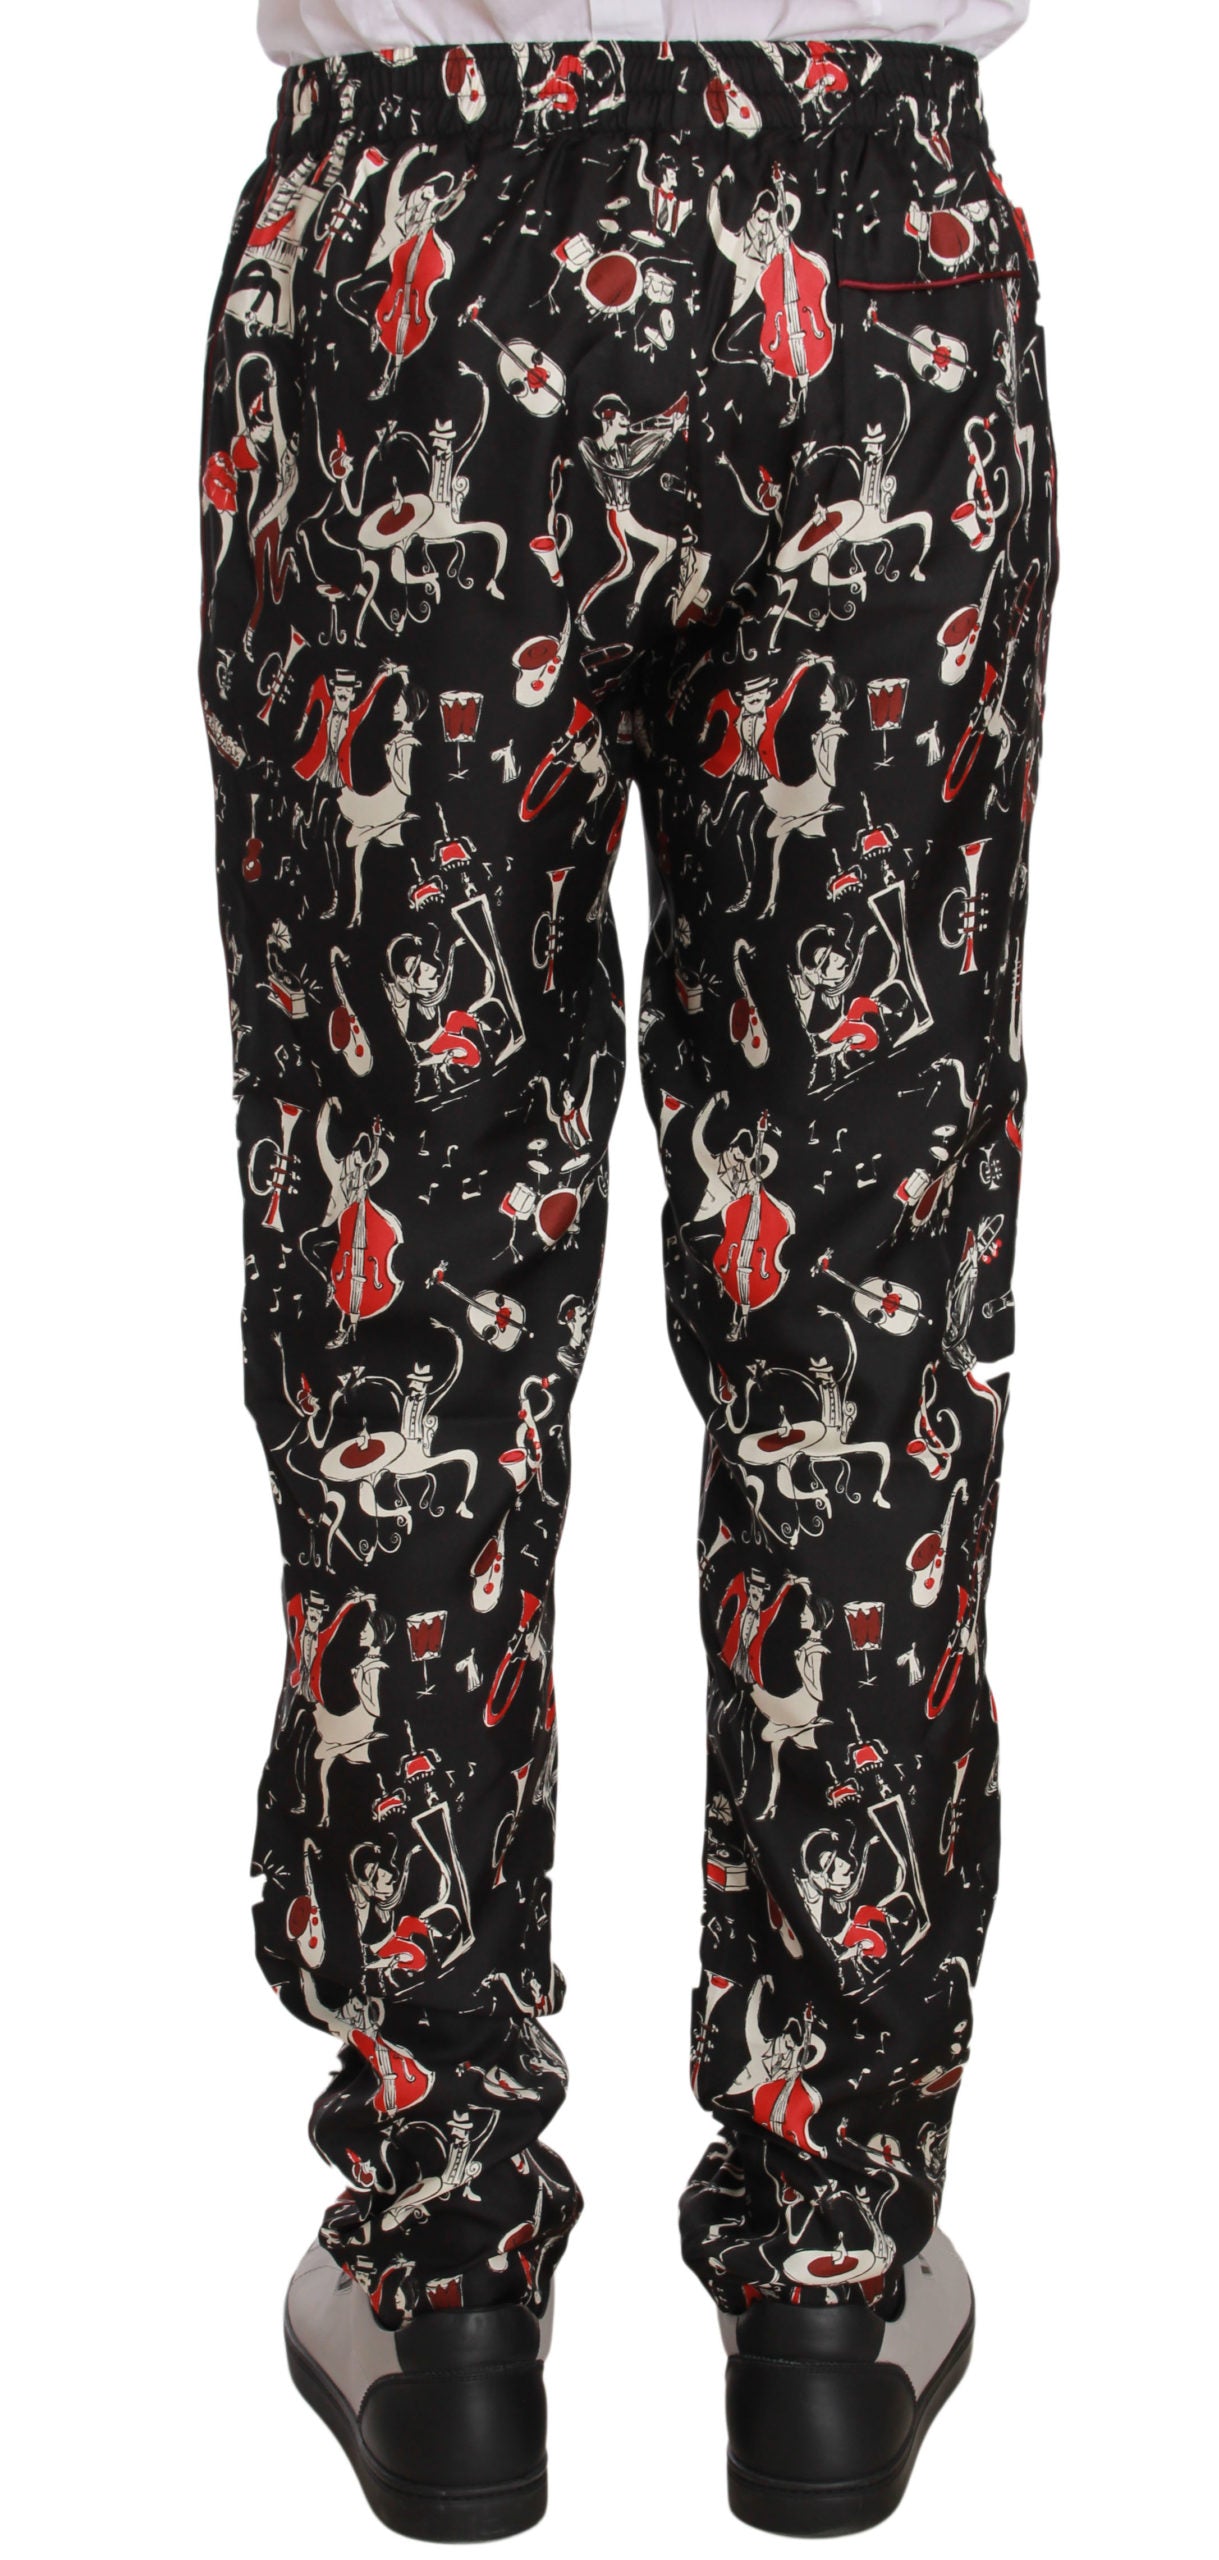 Buy Red Musical Instrument Print Sleepwear Pants by Dolce & Gabbana